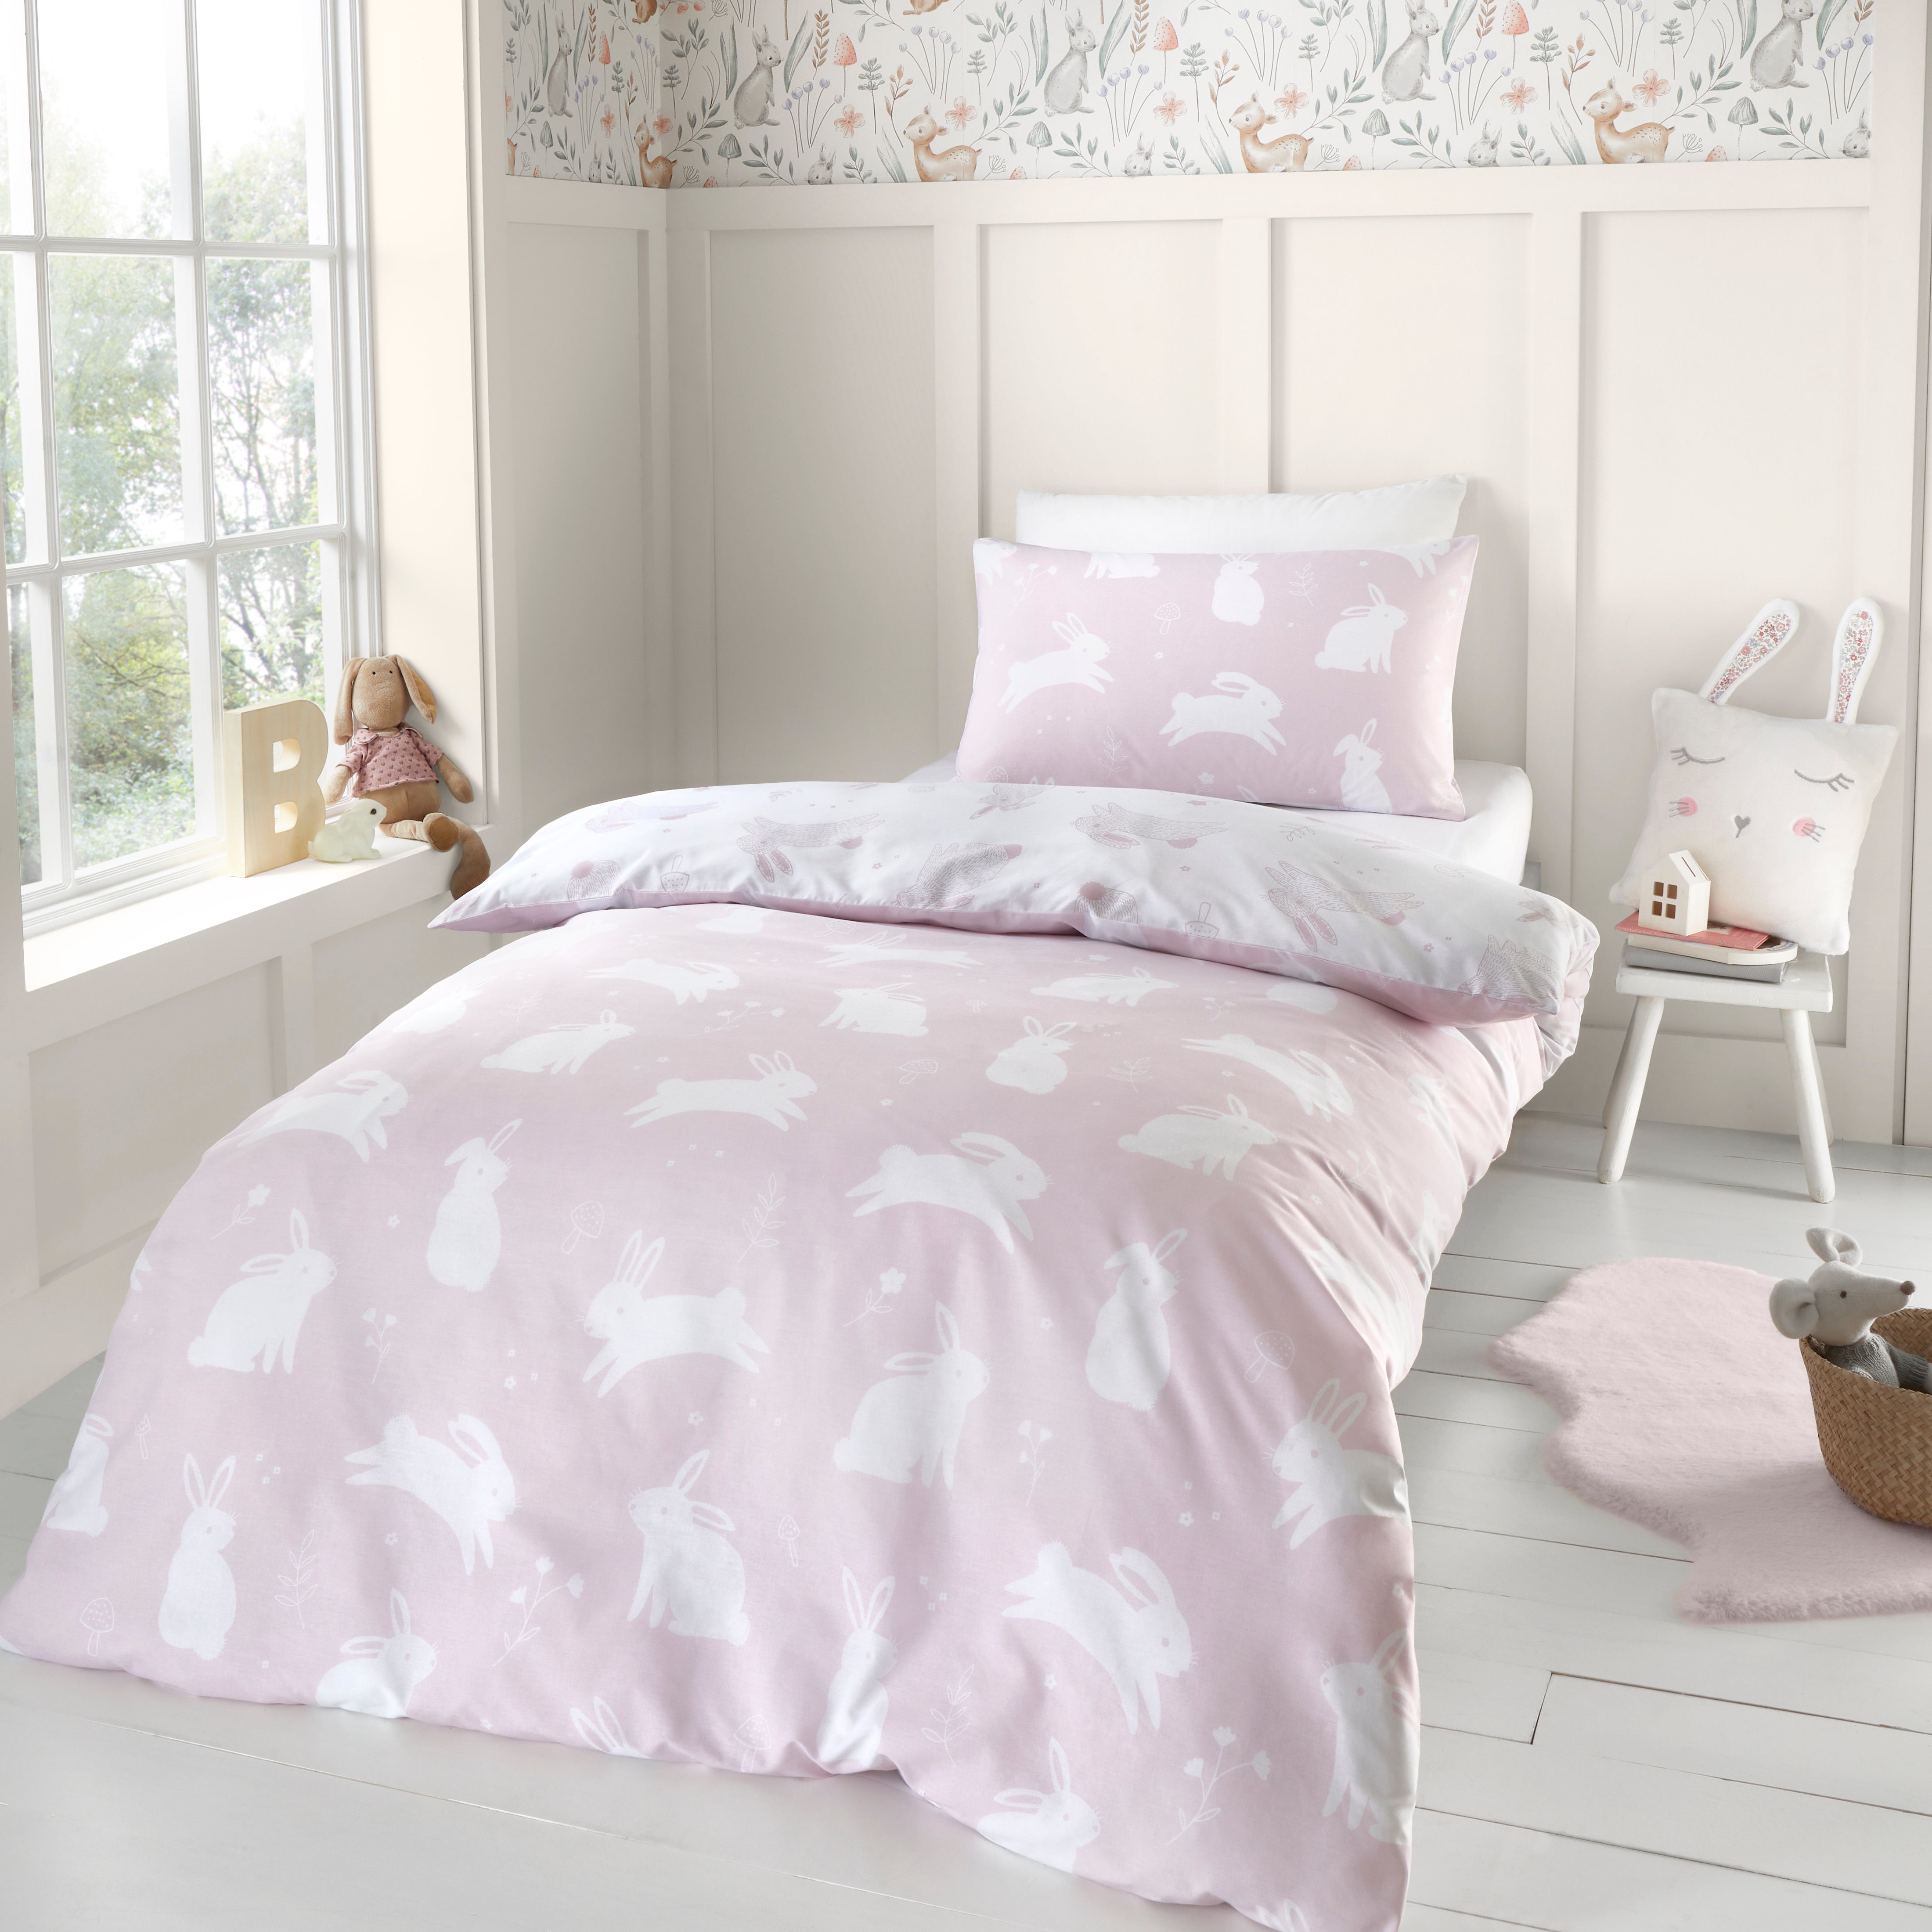 Pink Bunnies Duvet Cover And Pillowcase Set Pinkwhite